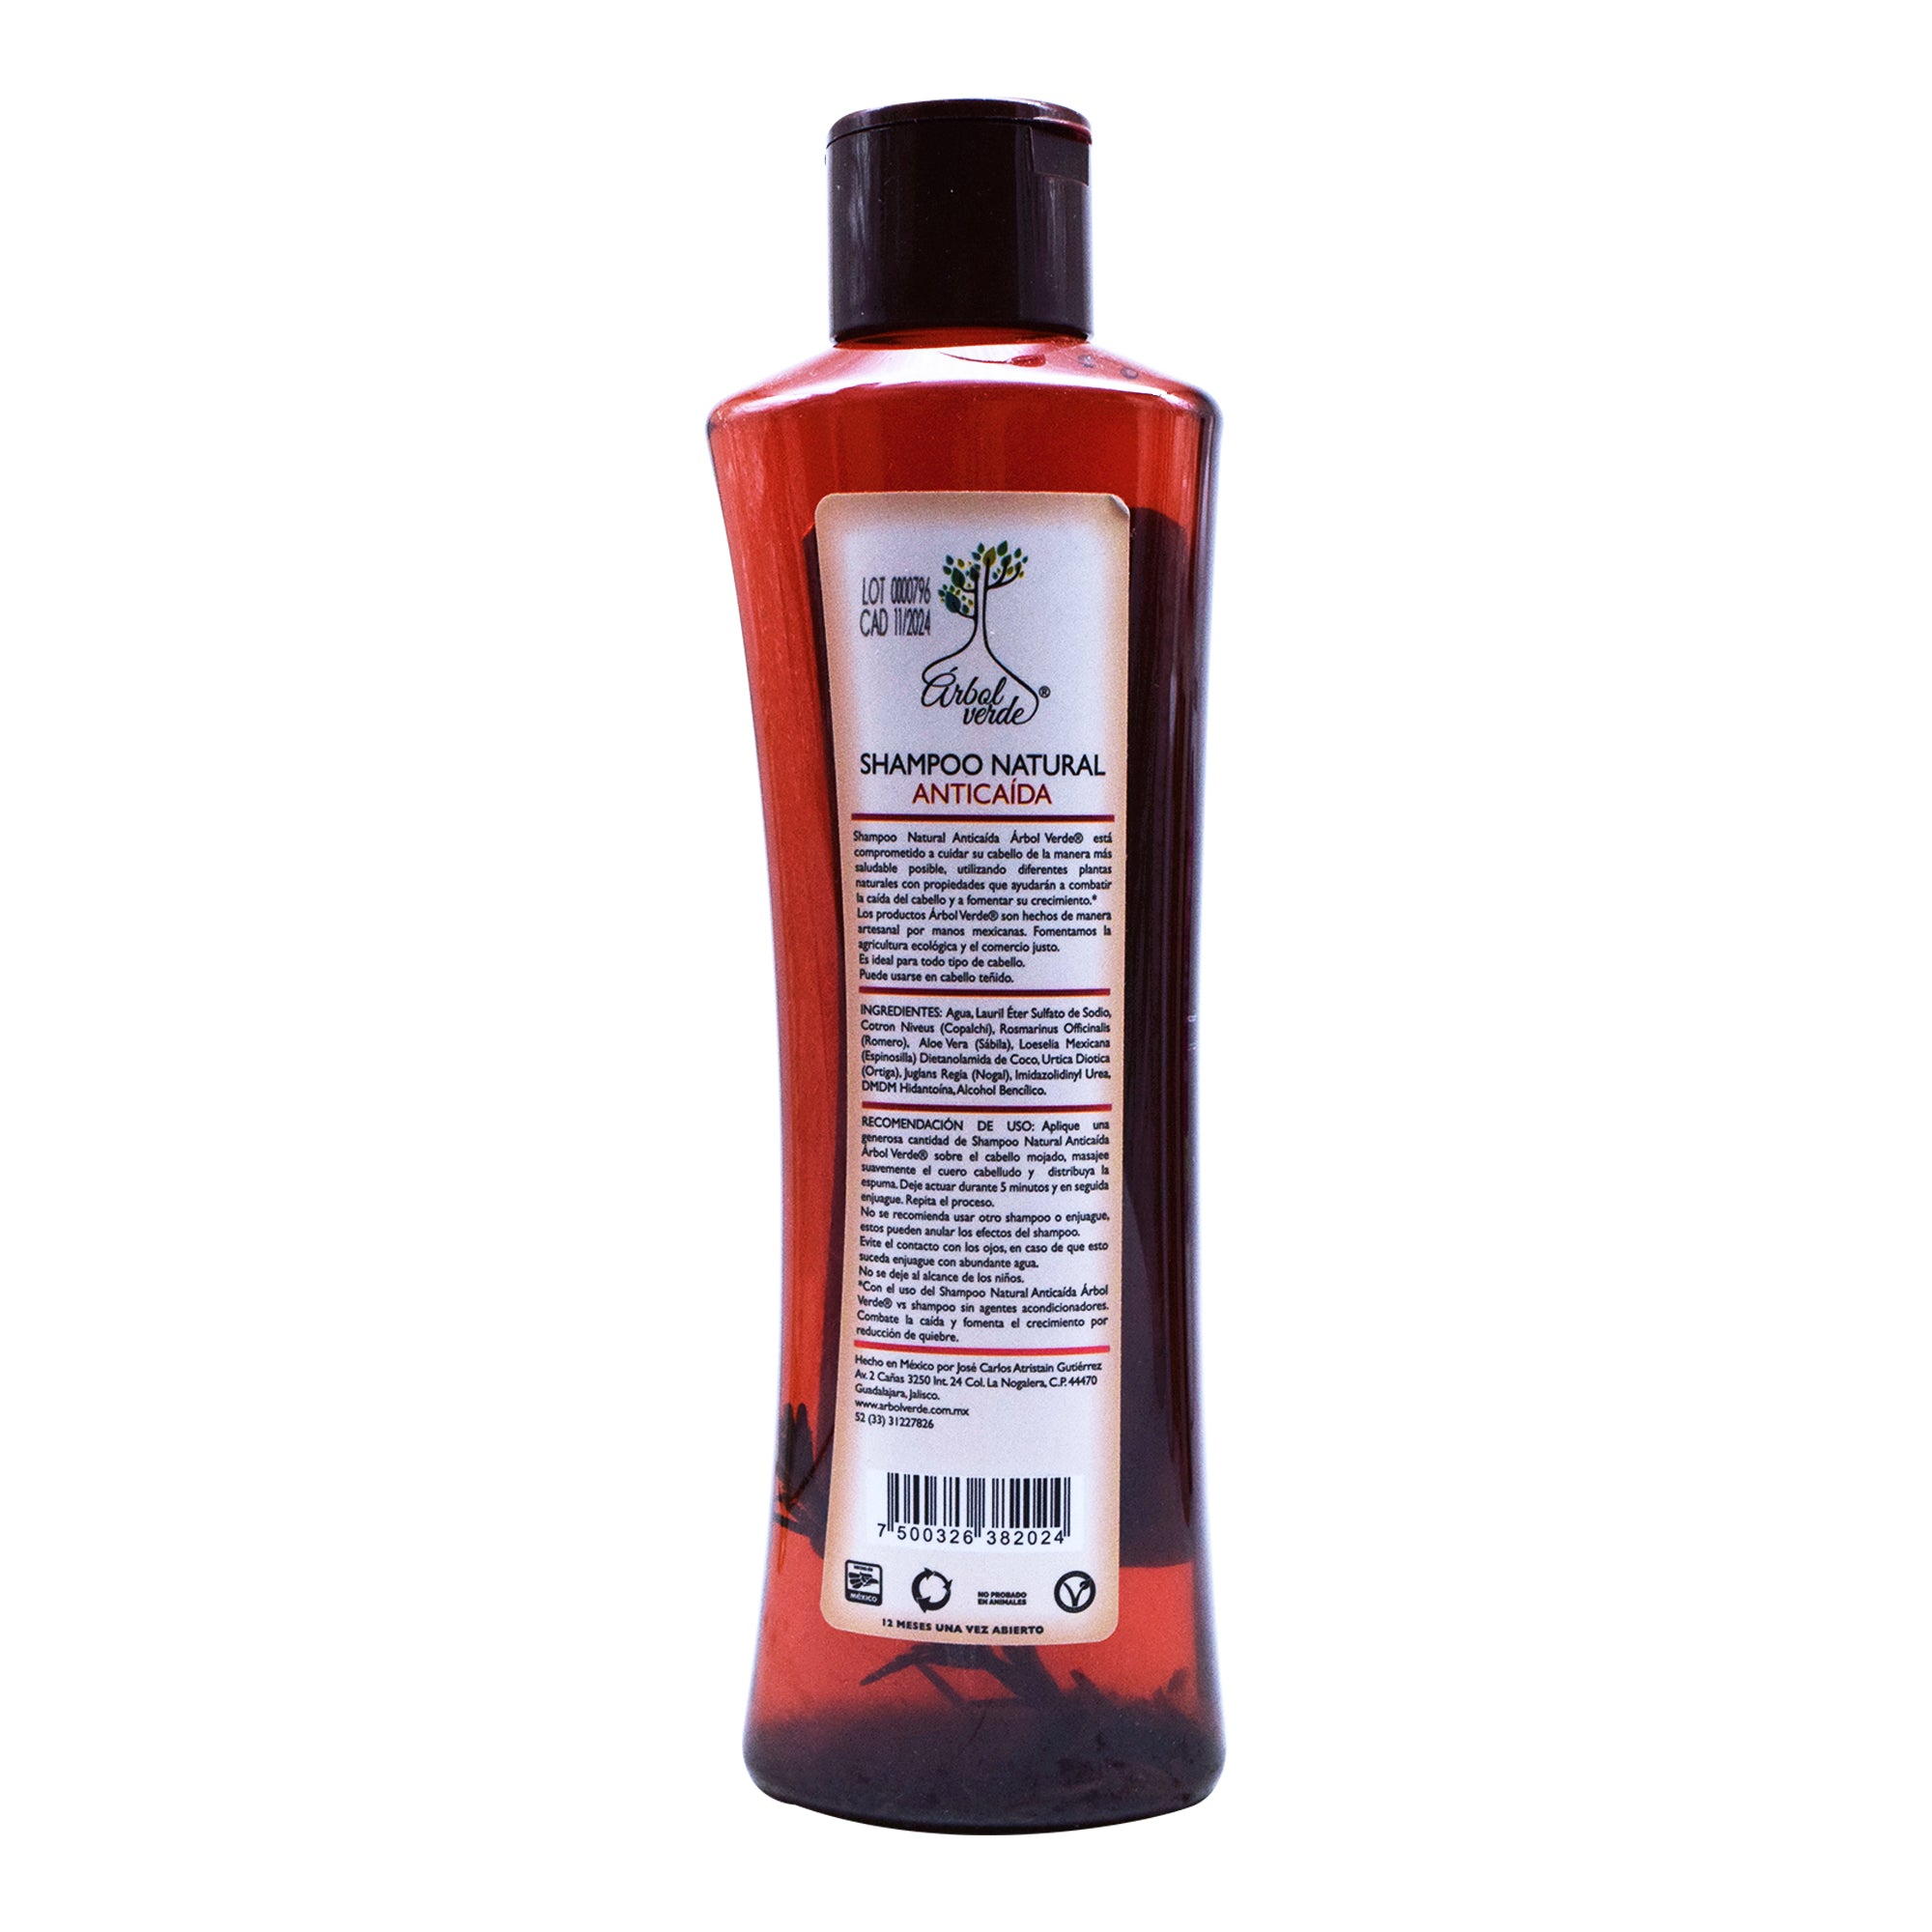 Shampoo anticaida natural 500 ml